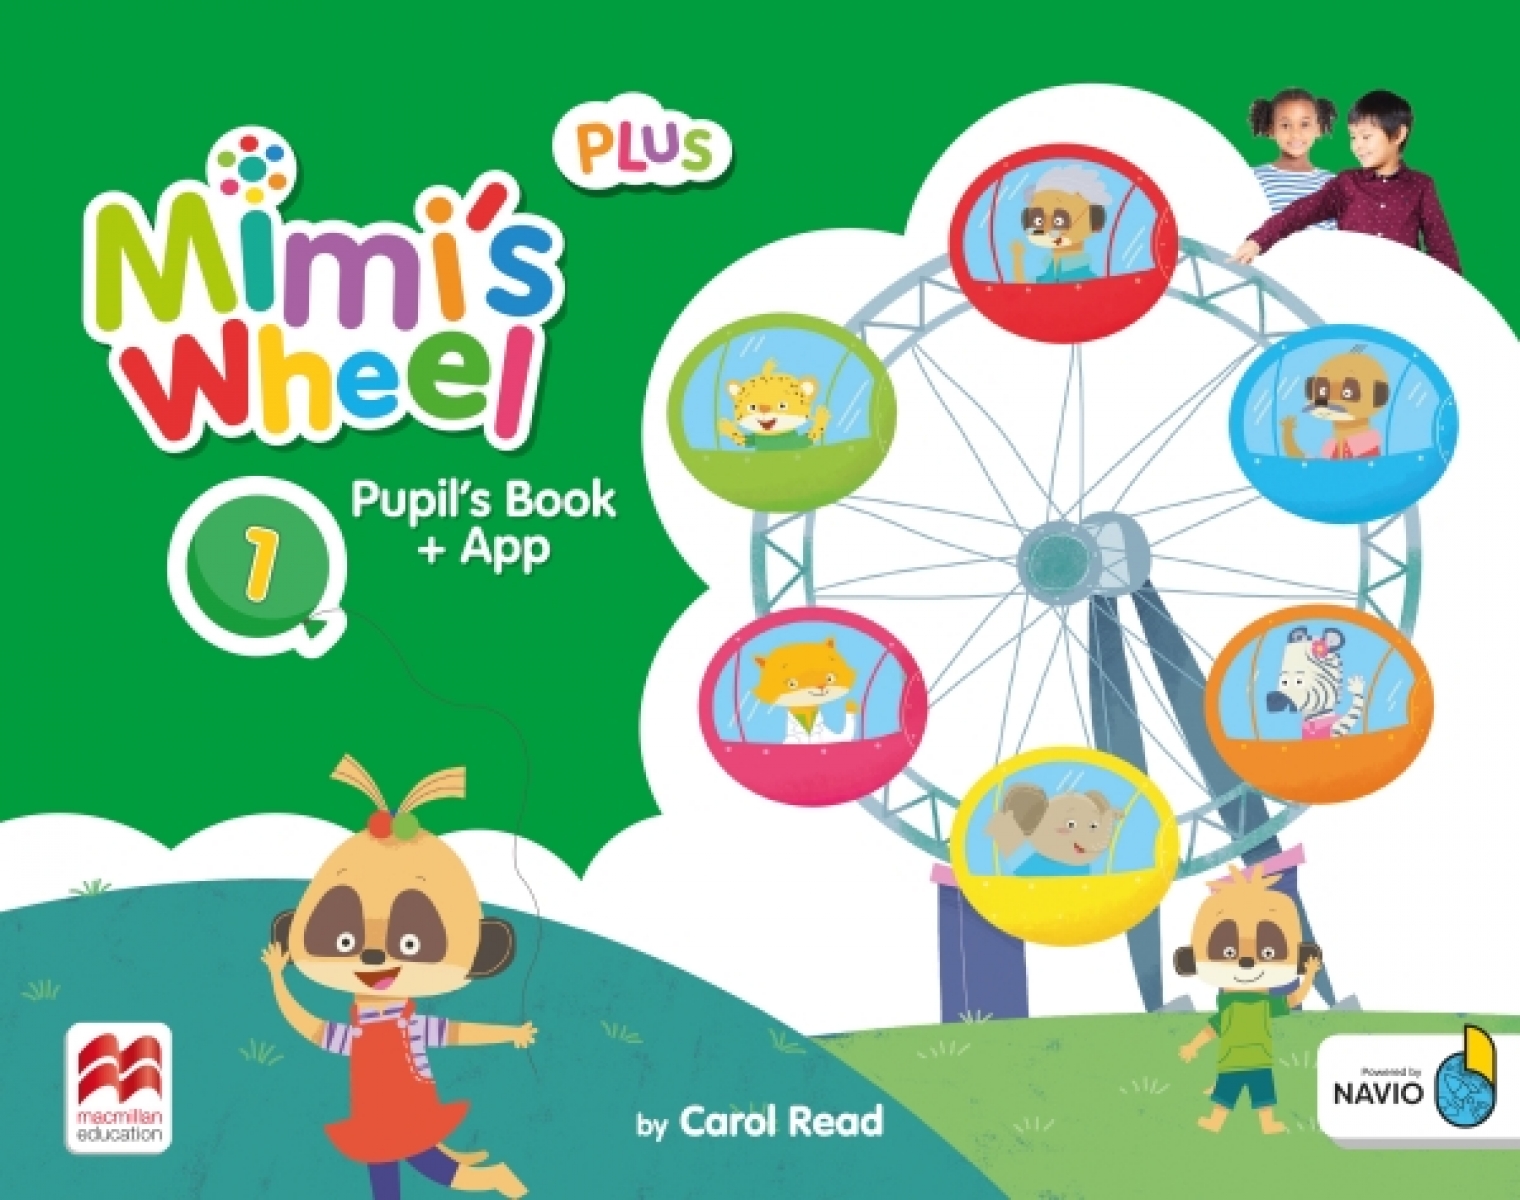 Read Carol Mimi's Wheel 1. Pupil's Book Plus with Navio App 